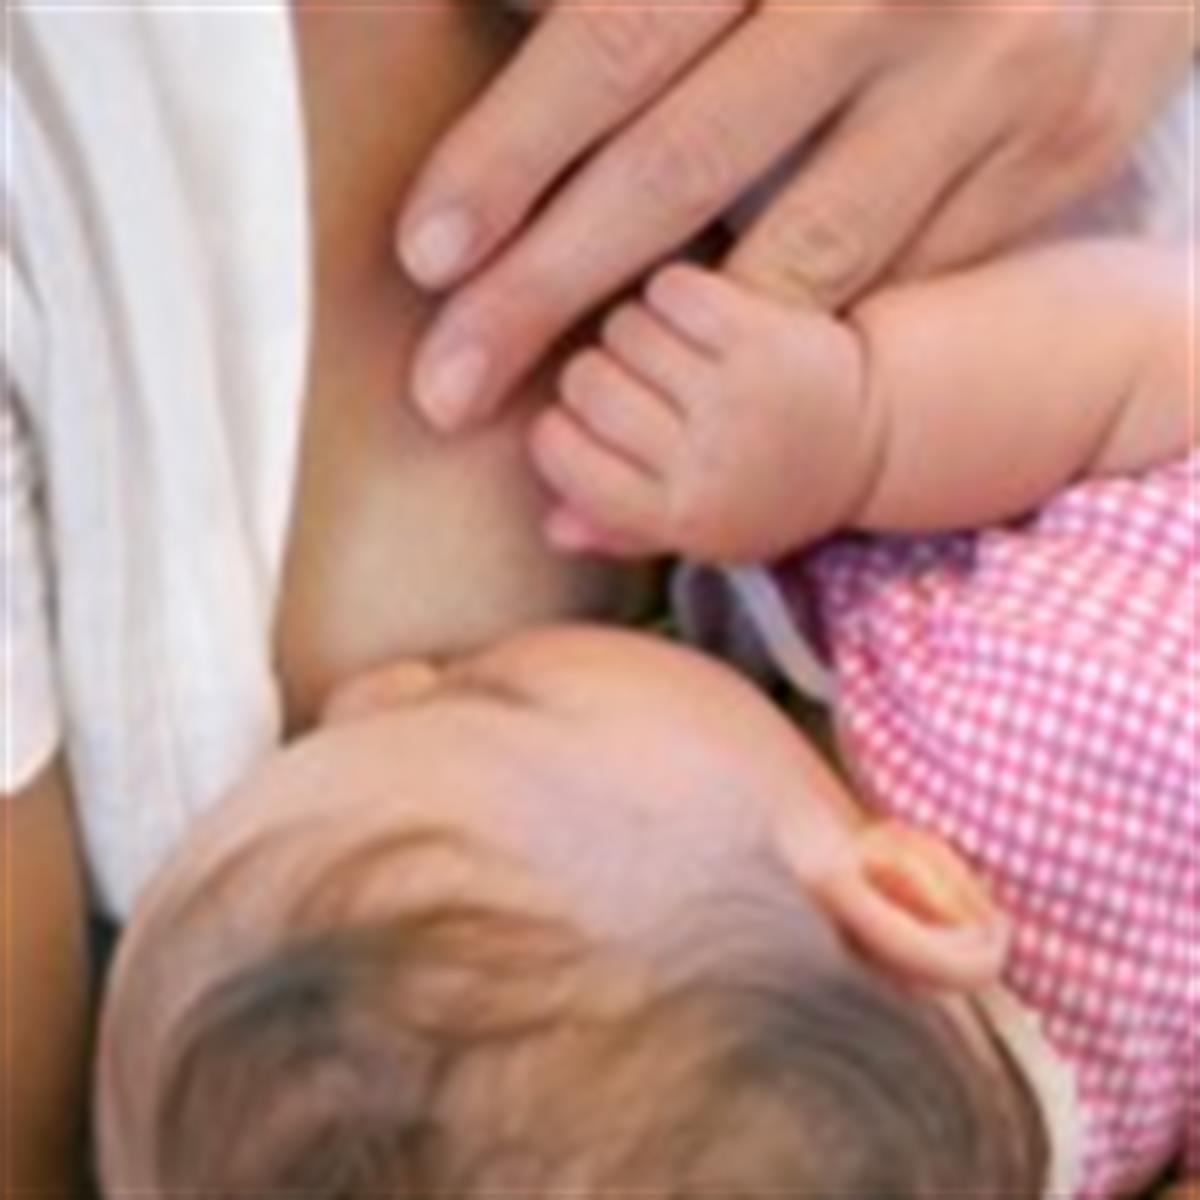 rash on breast (pic included) - Breastfeeding, Forums